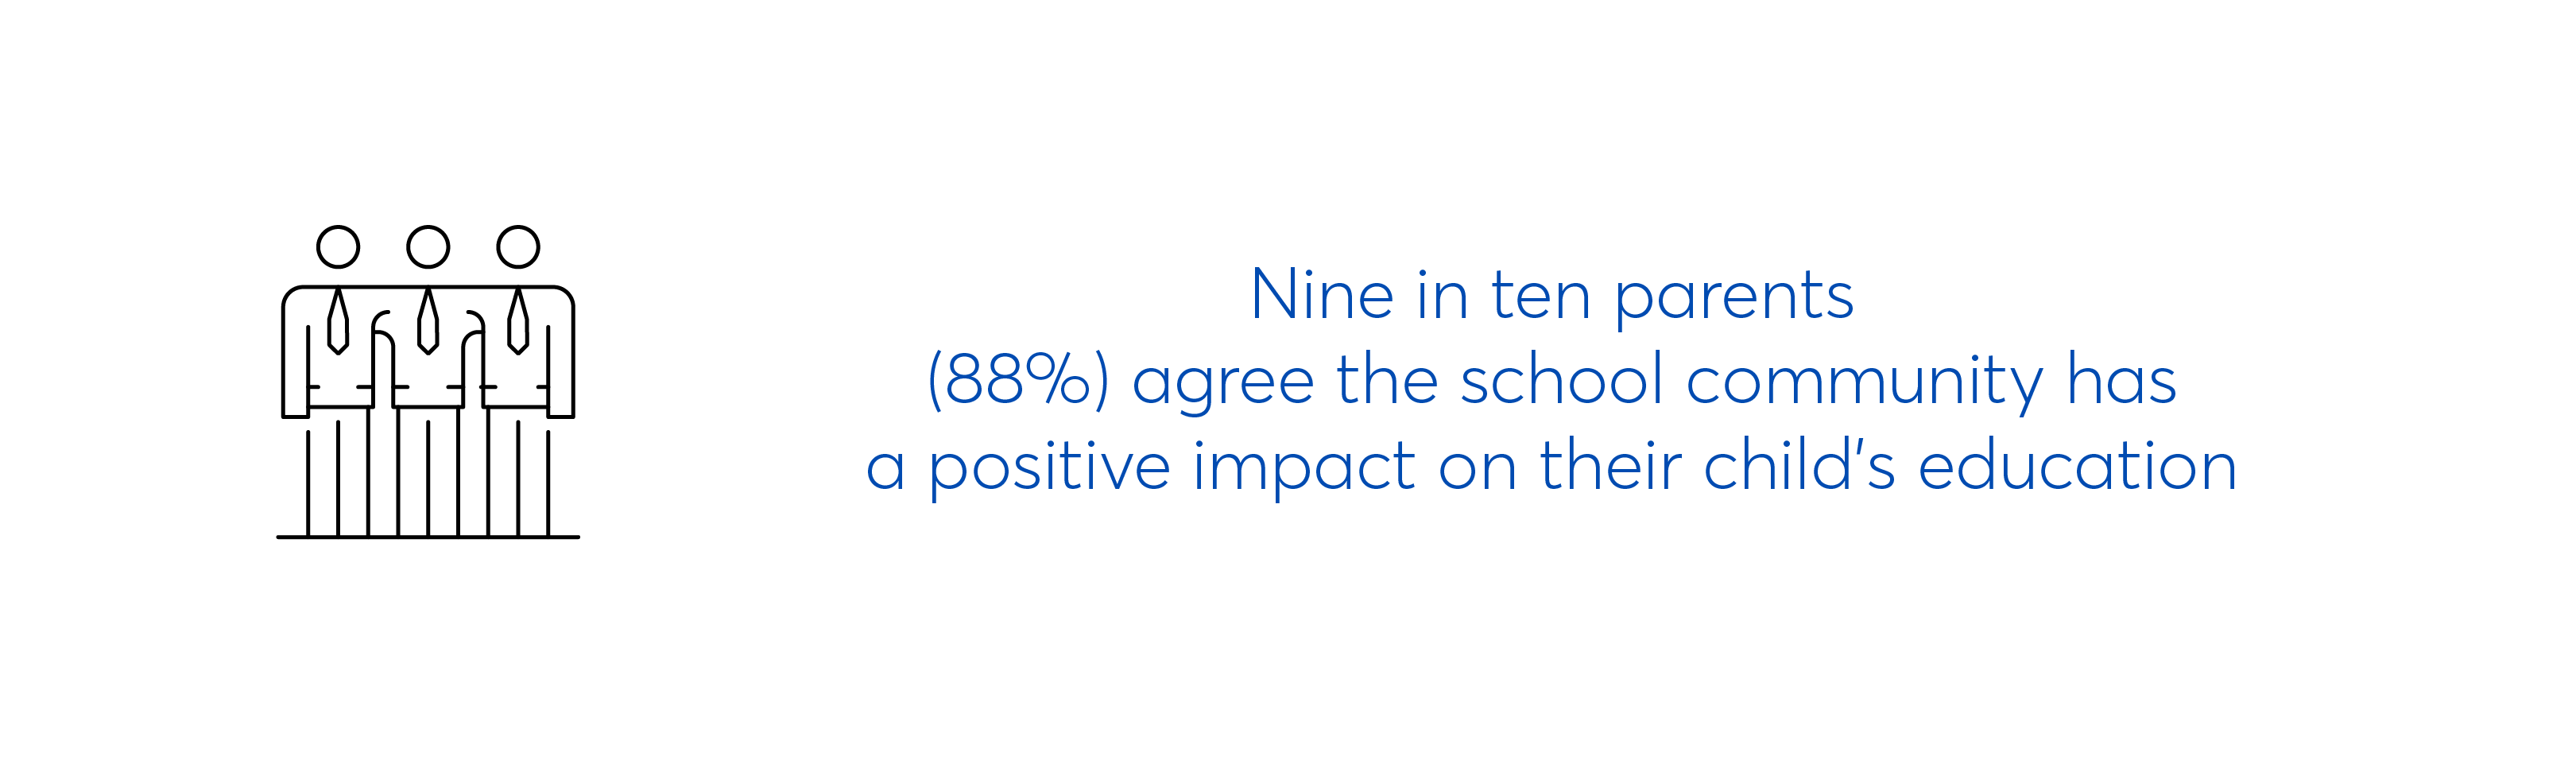 The school community has a positive impact